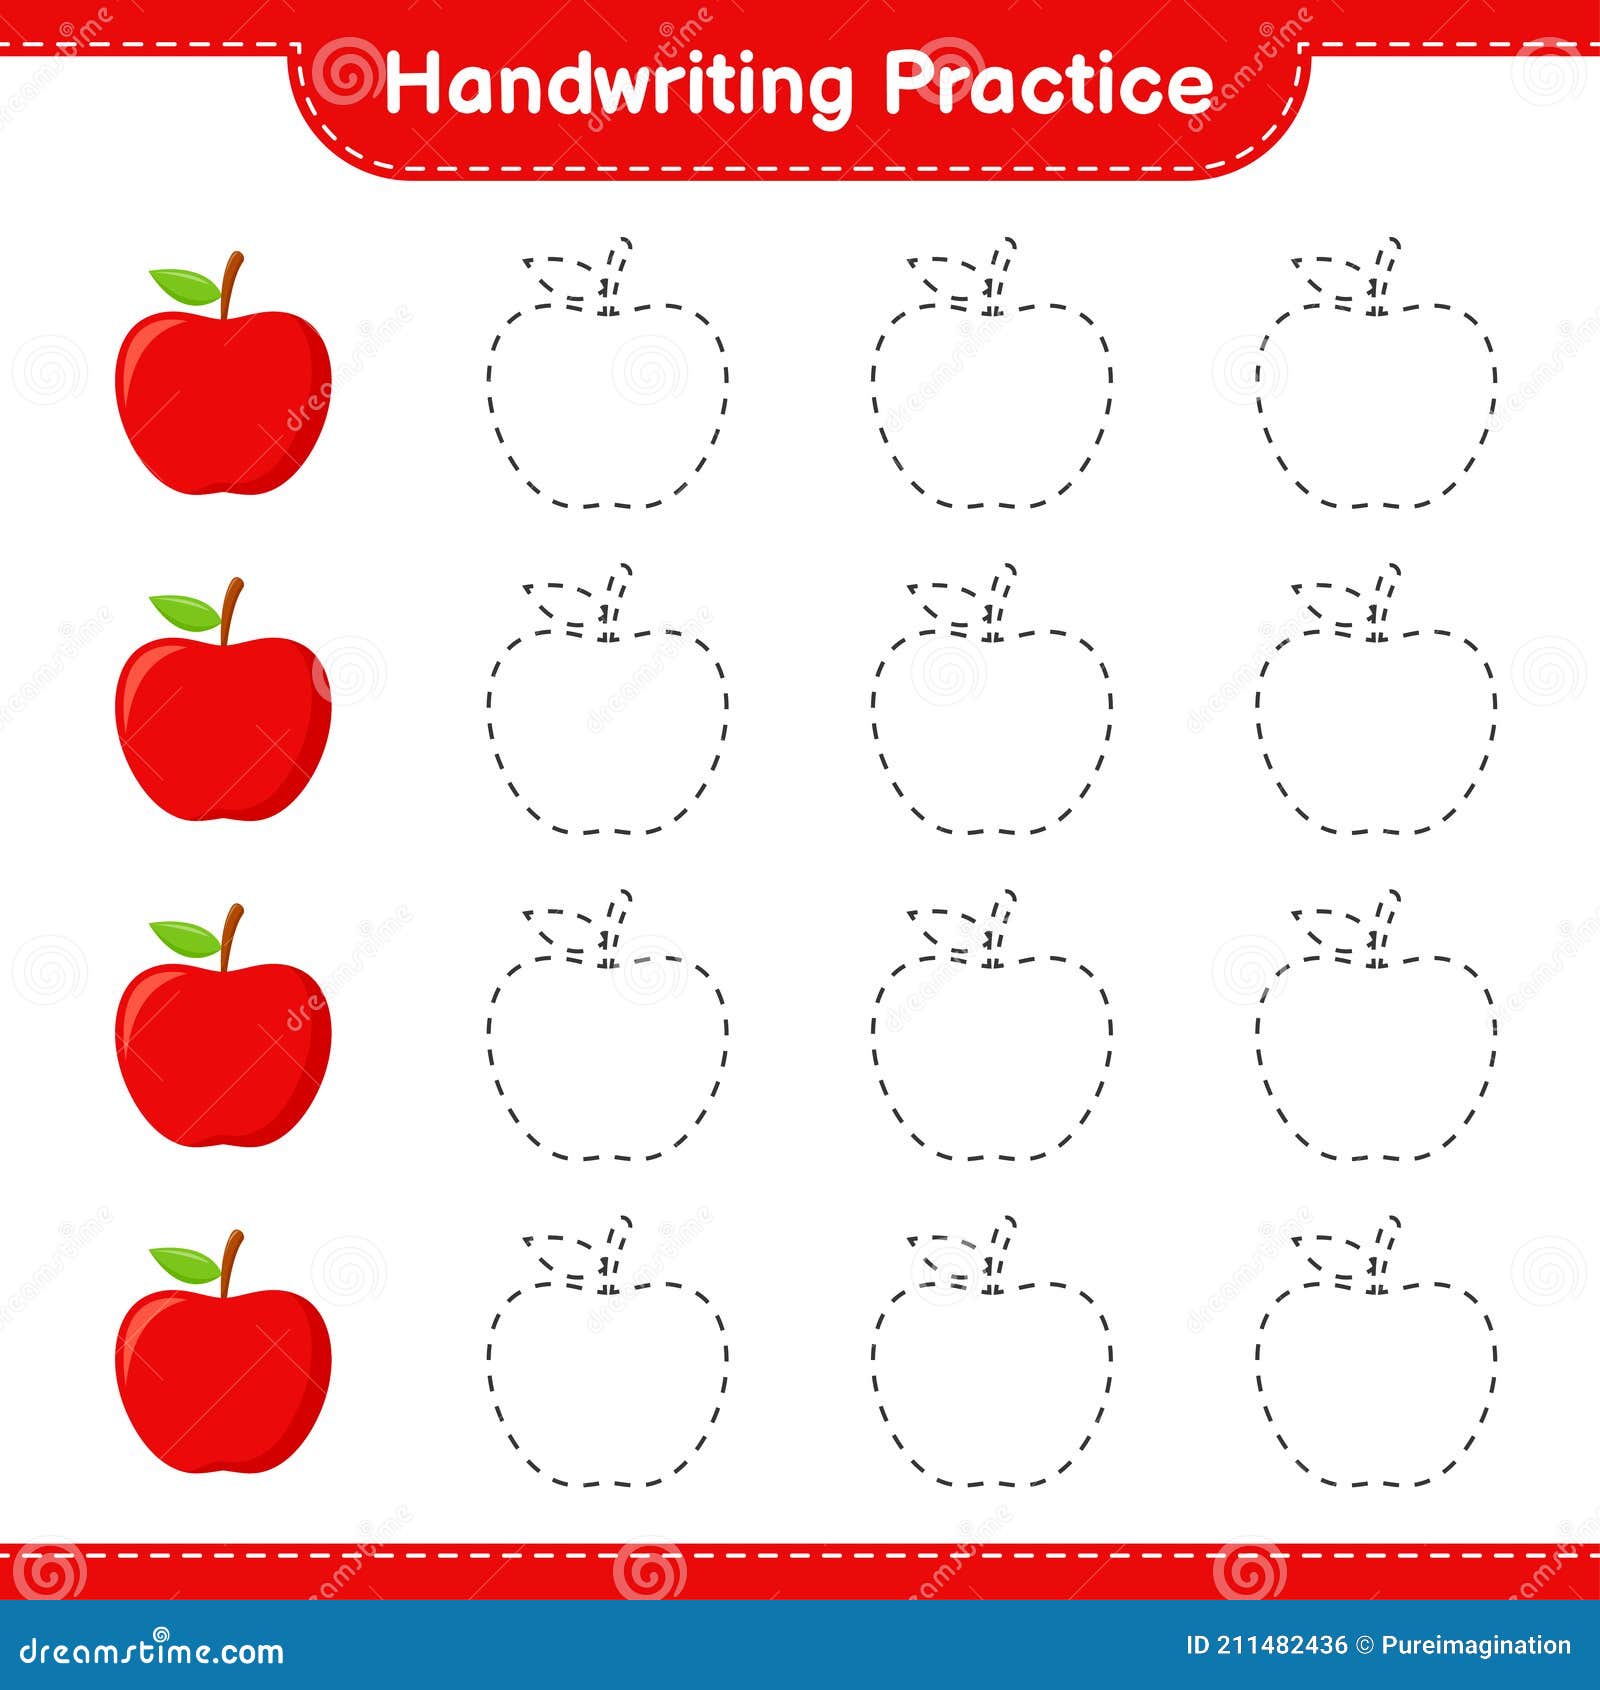 Handwriting Practice Sheet. Educational Children Game, Printable Worksheet  for Kids. Writing Training, Tracing Lines. Stock Vector - Illustration of  elementary, handwriting: 106195431